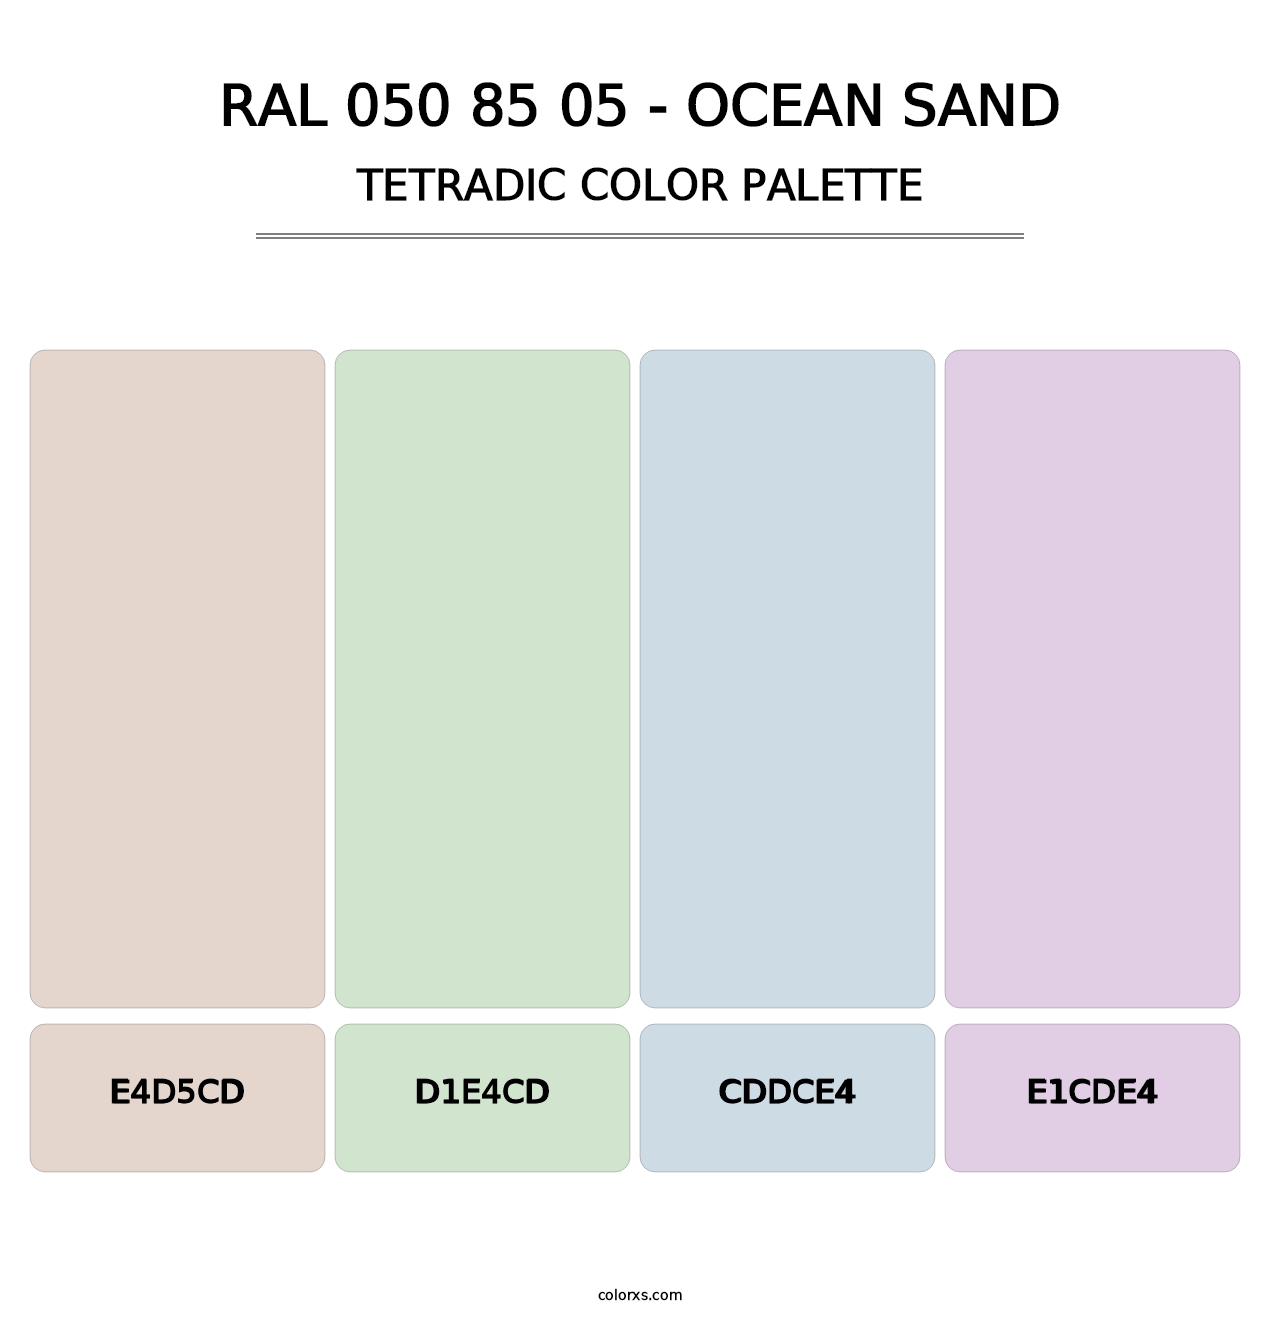 RAL 050 85 05 - Ocean Sand - Tetradic Color Palette